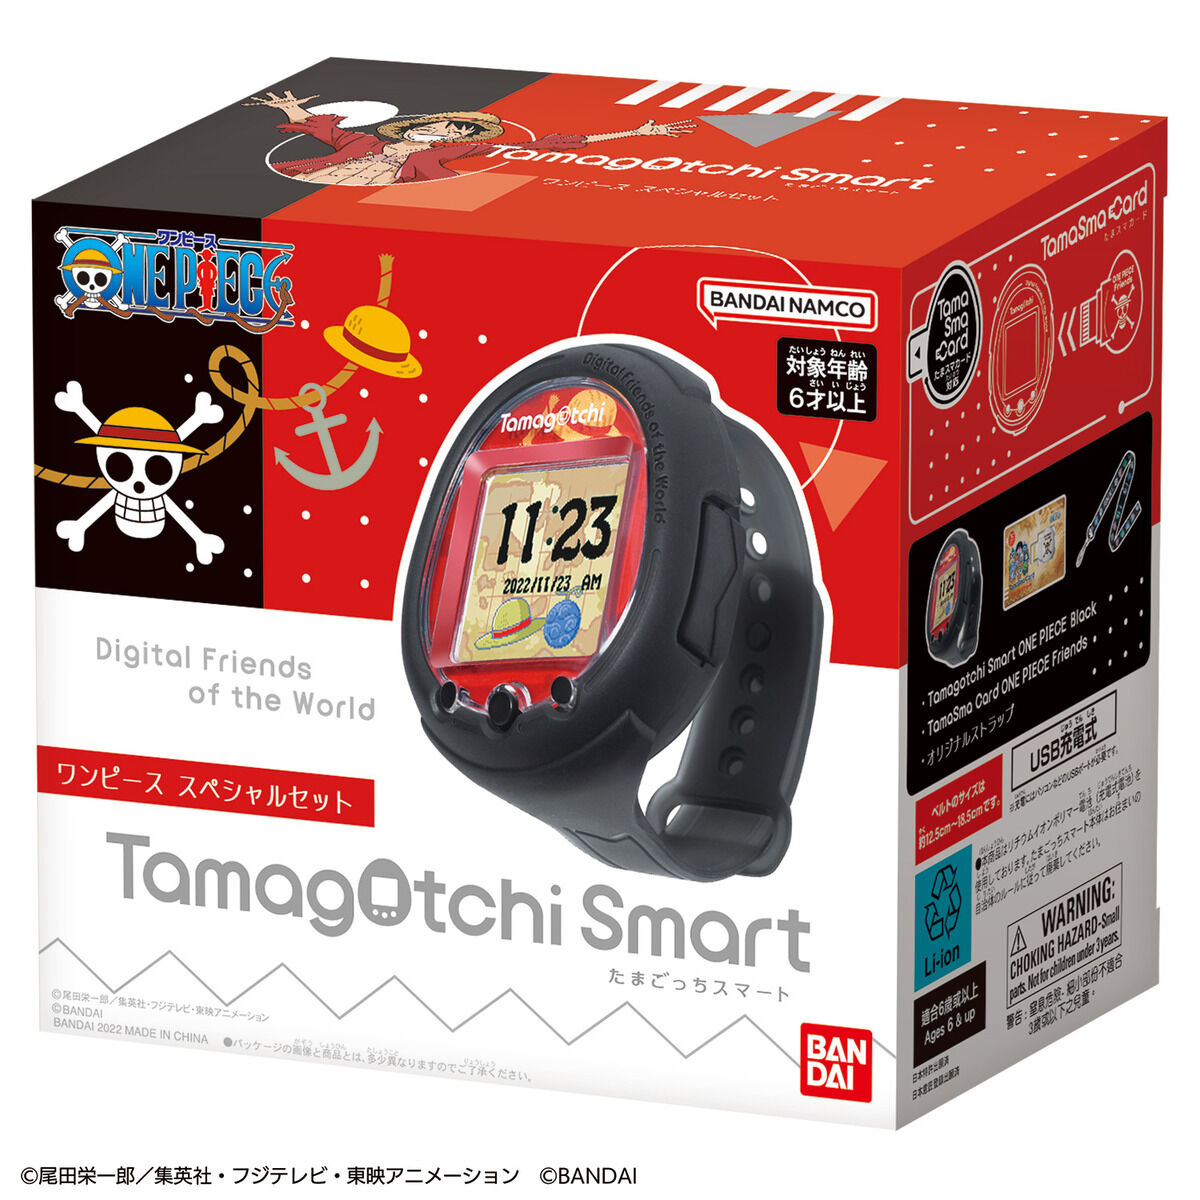 Tamagotchi Smart ワンピーススペシャルセット | Tamagotchi Smart ...